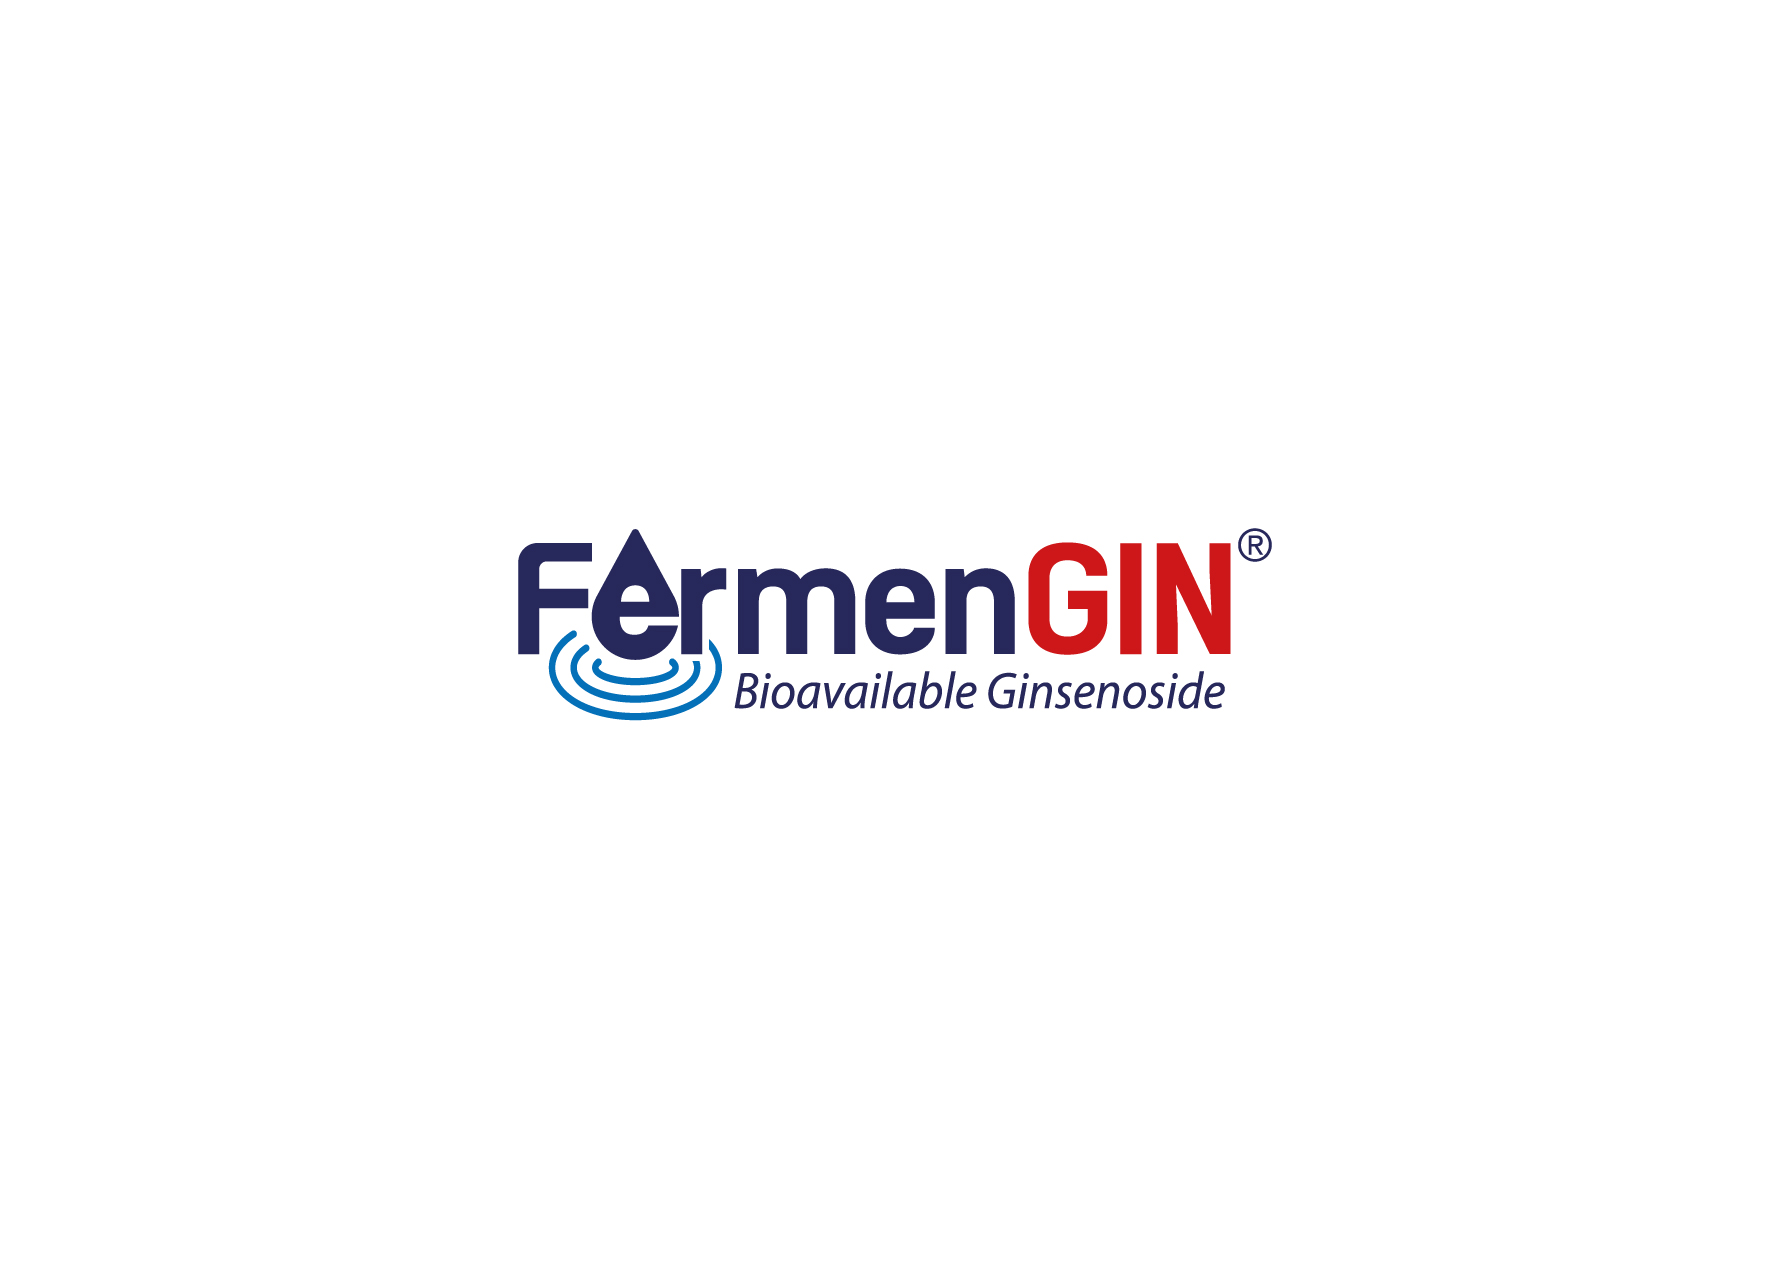 FermenGIN - Introduction Video